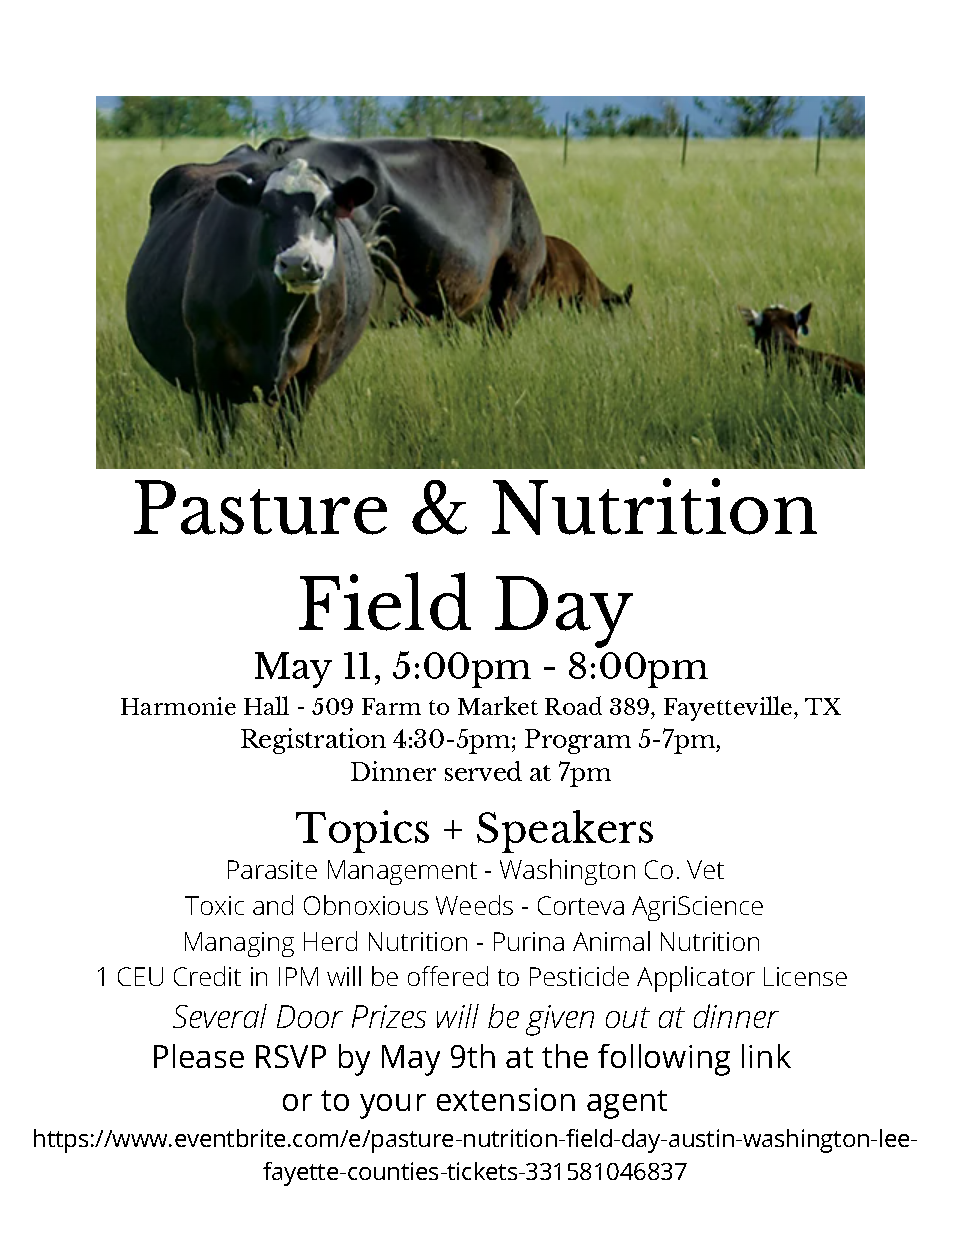 Pasture & Nutrition Field Day (CEUs) - Fayette County - Washington